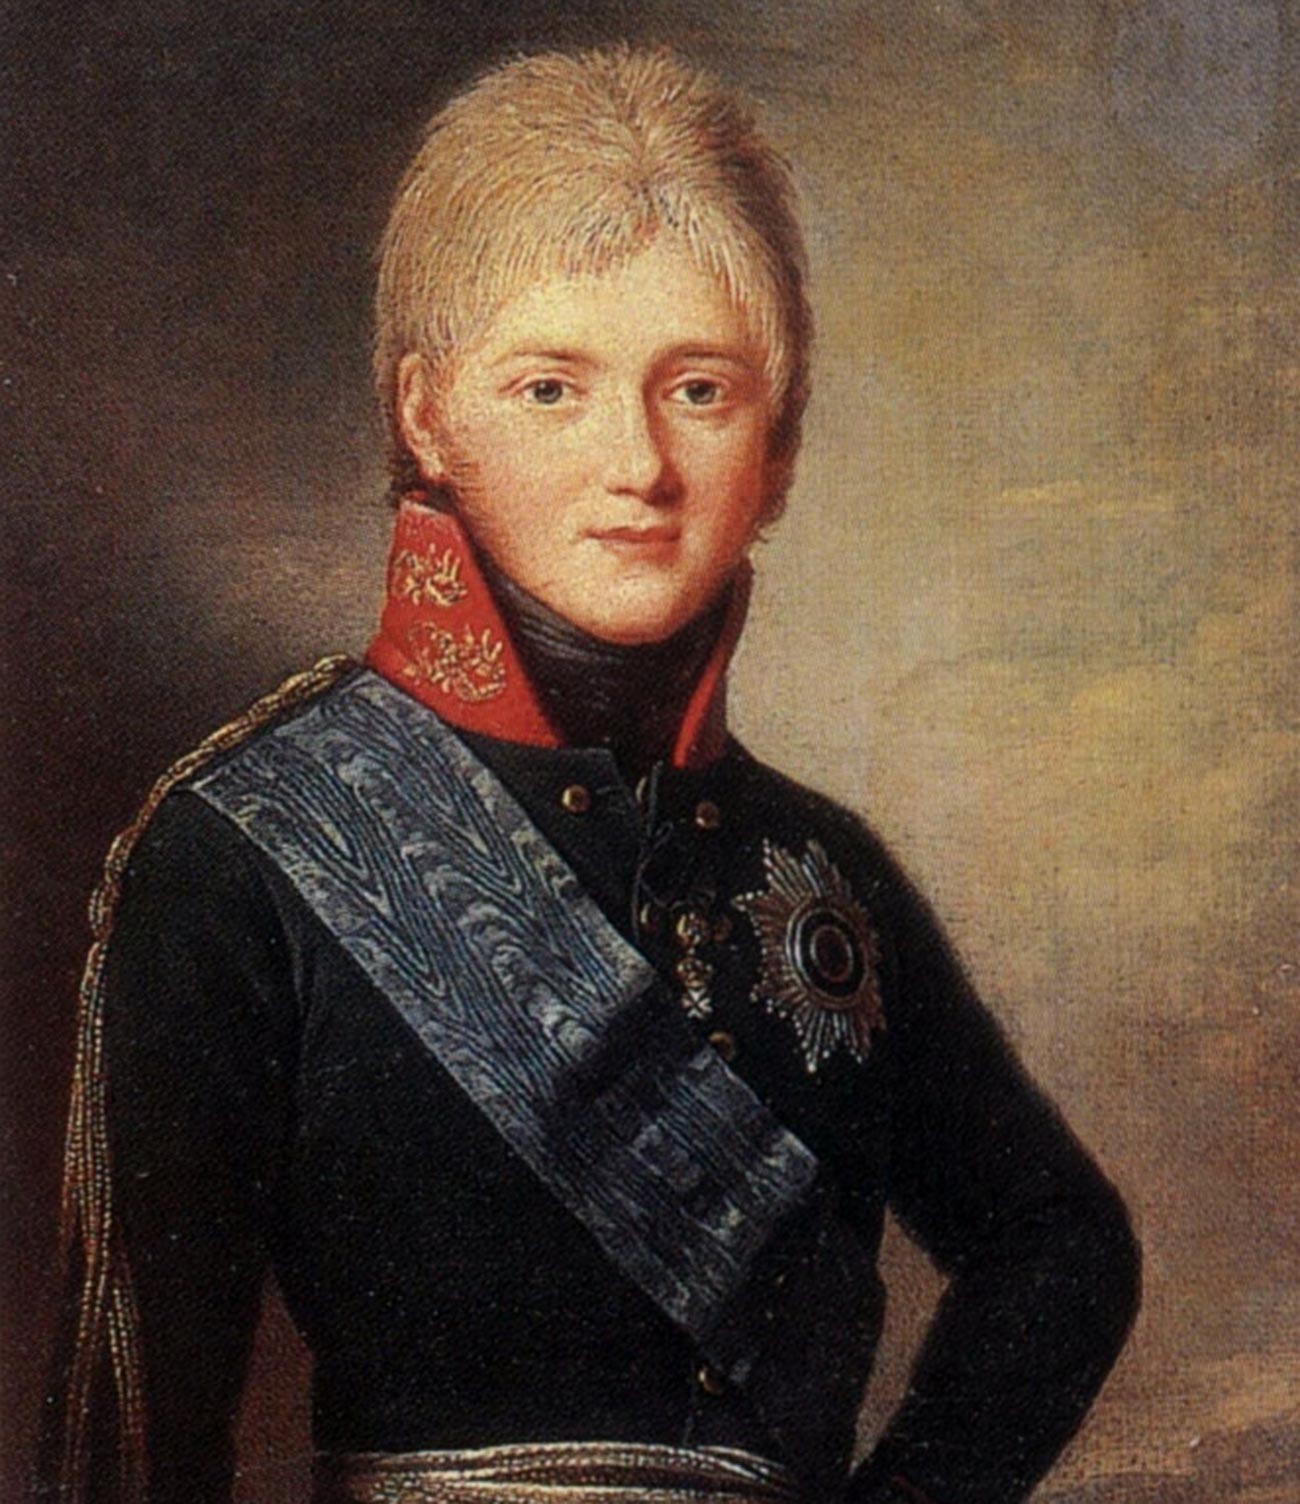 Портрет великог кнеза Александра Павловича, будућег императора Александра I.